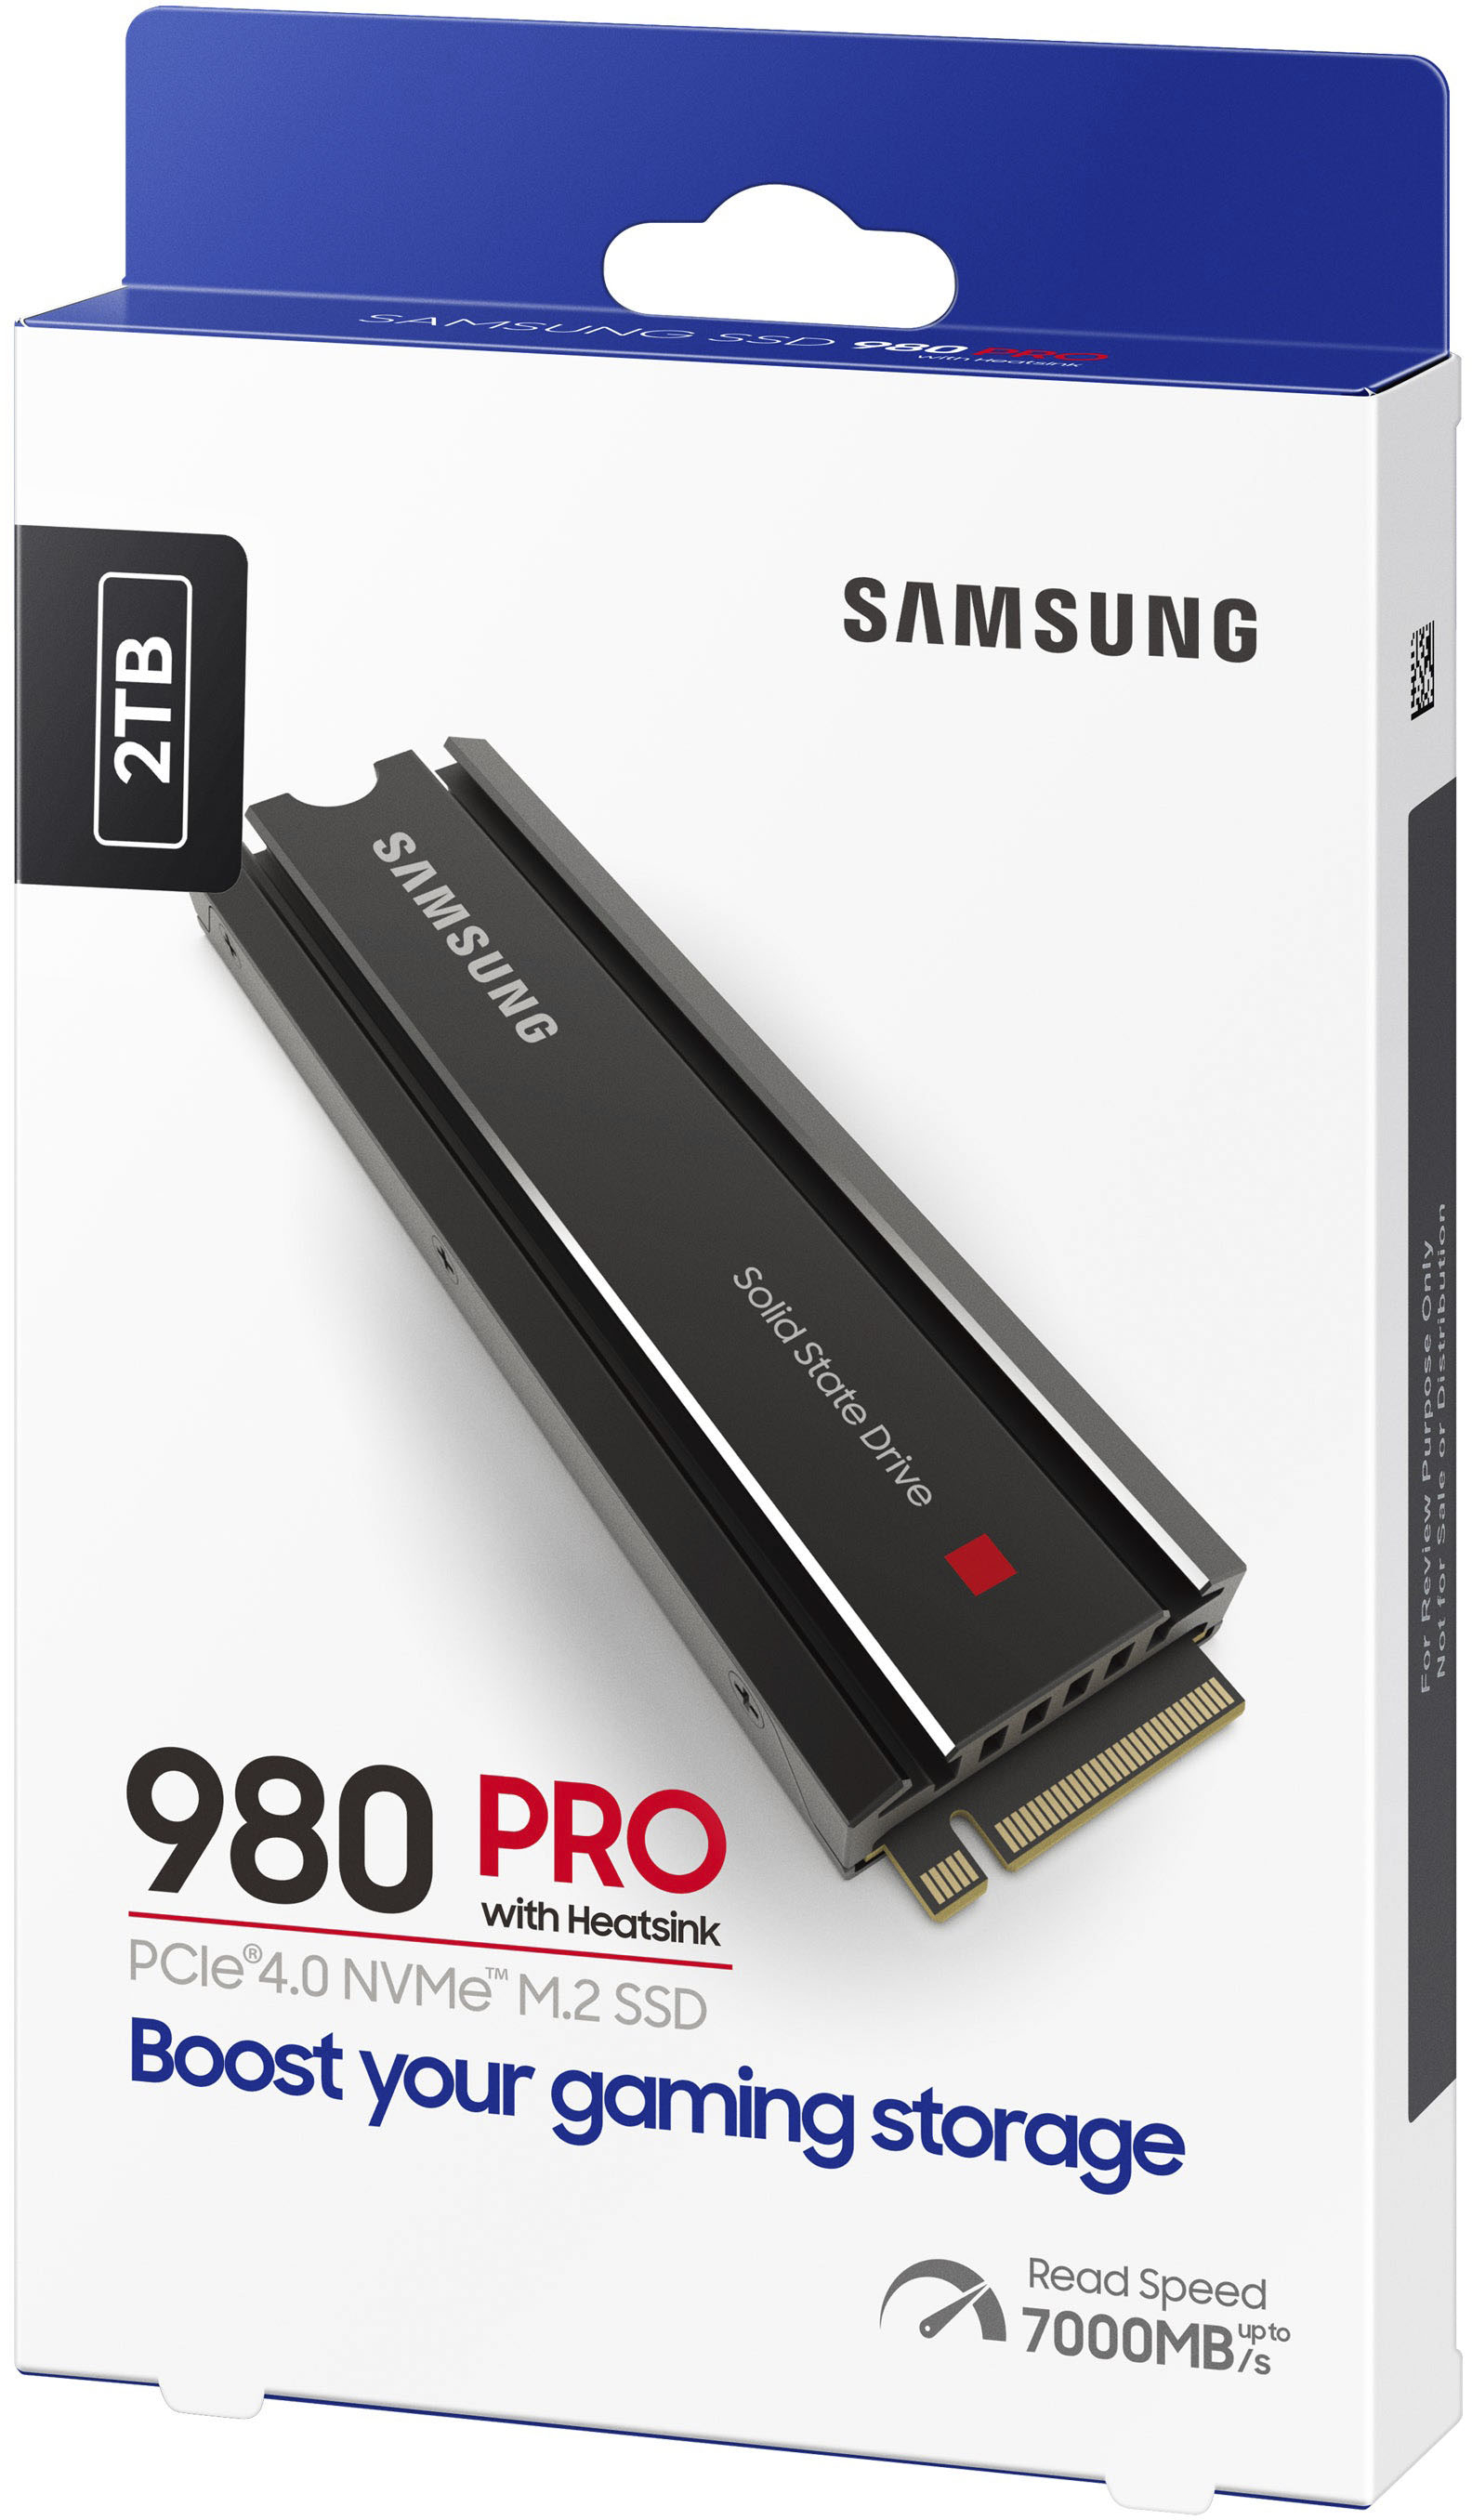 Outlaw kyst statisk Samsung 980 PRO Heatsink 2TB Internal SSD PCIe Gen 4 x4 NVMe for PS5  MZ-V8P2T0CW - Best Buy